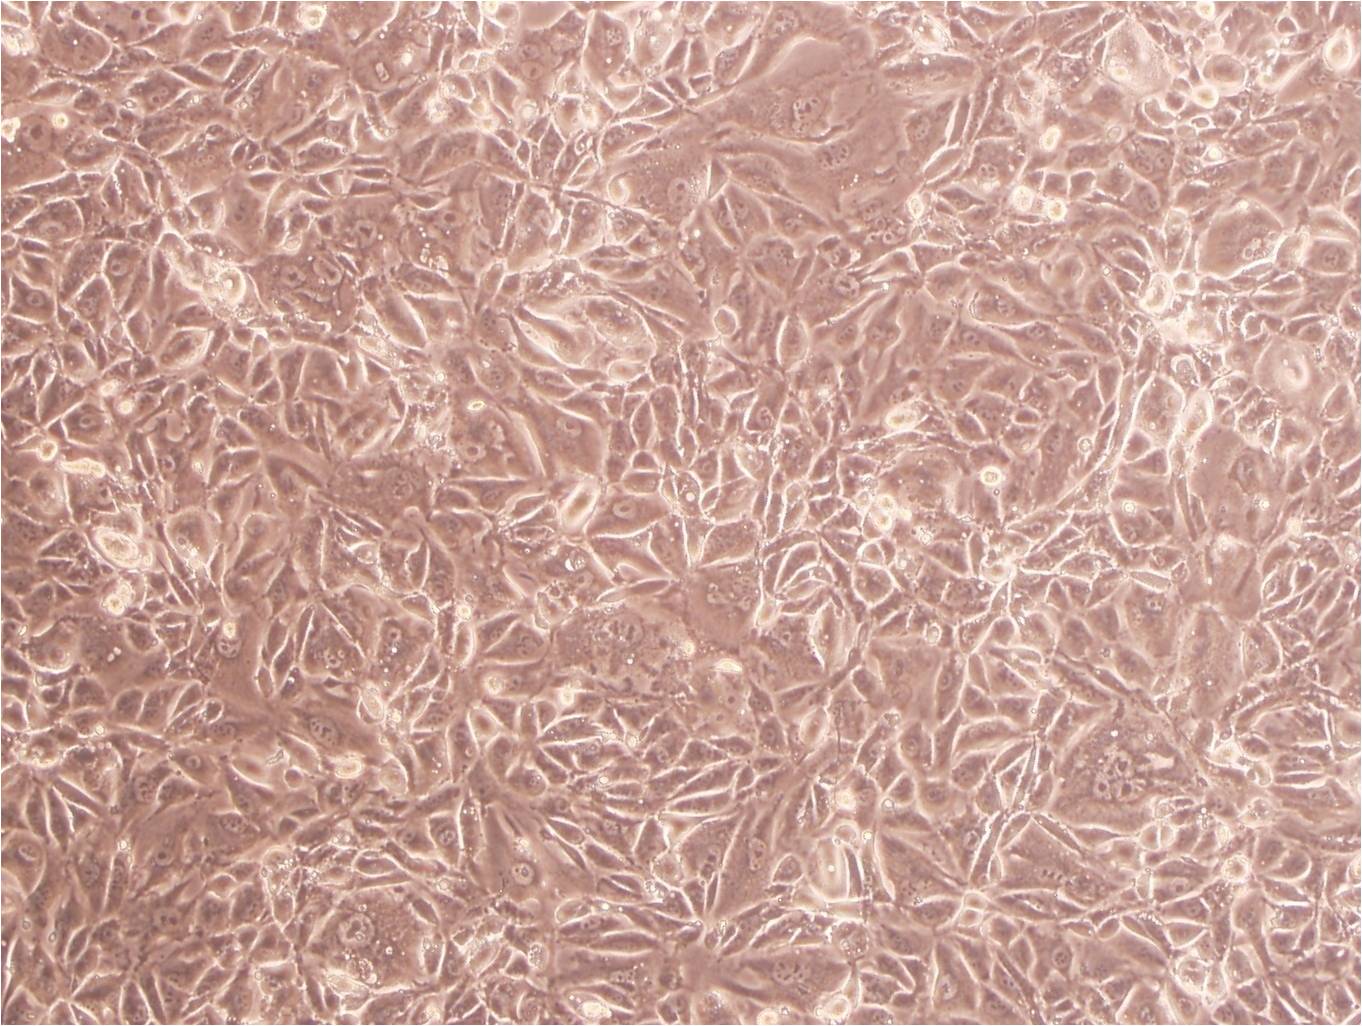 Ca Ski Cell:人宫颈癌肠转移细胞系